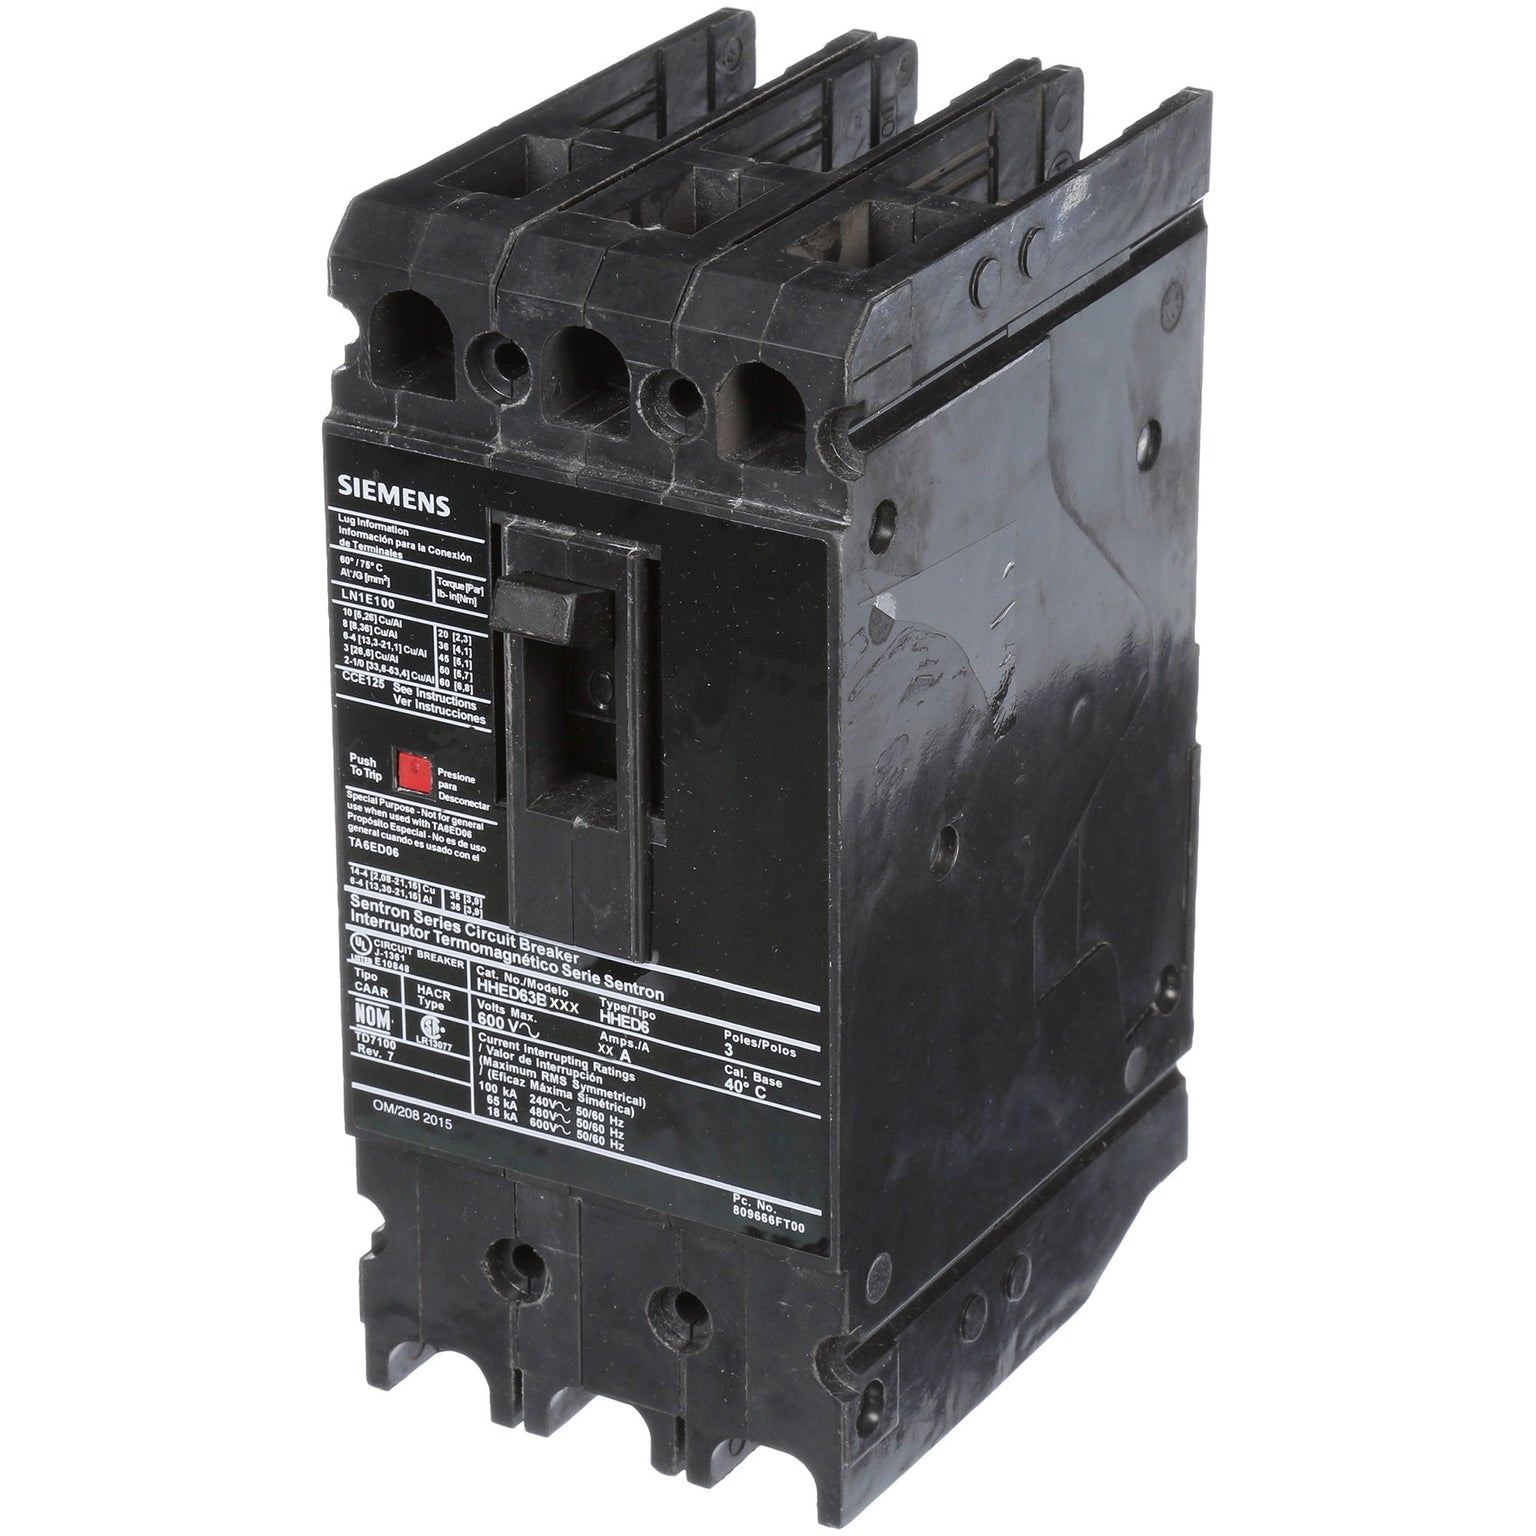 HHED63B035 - Siemens - Molded Case Circuit Breaker